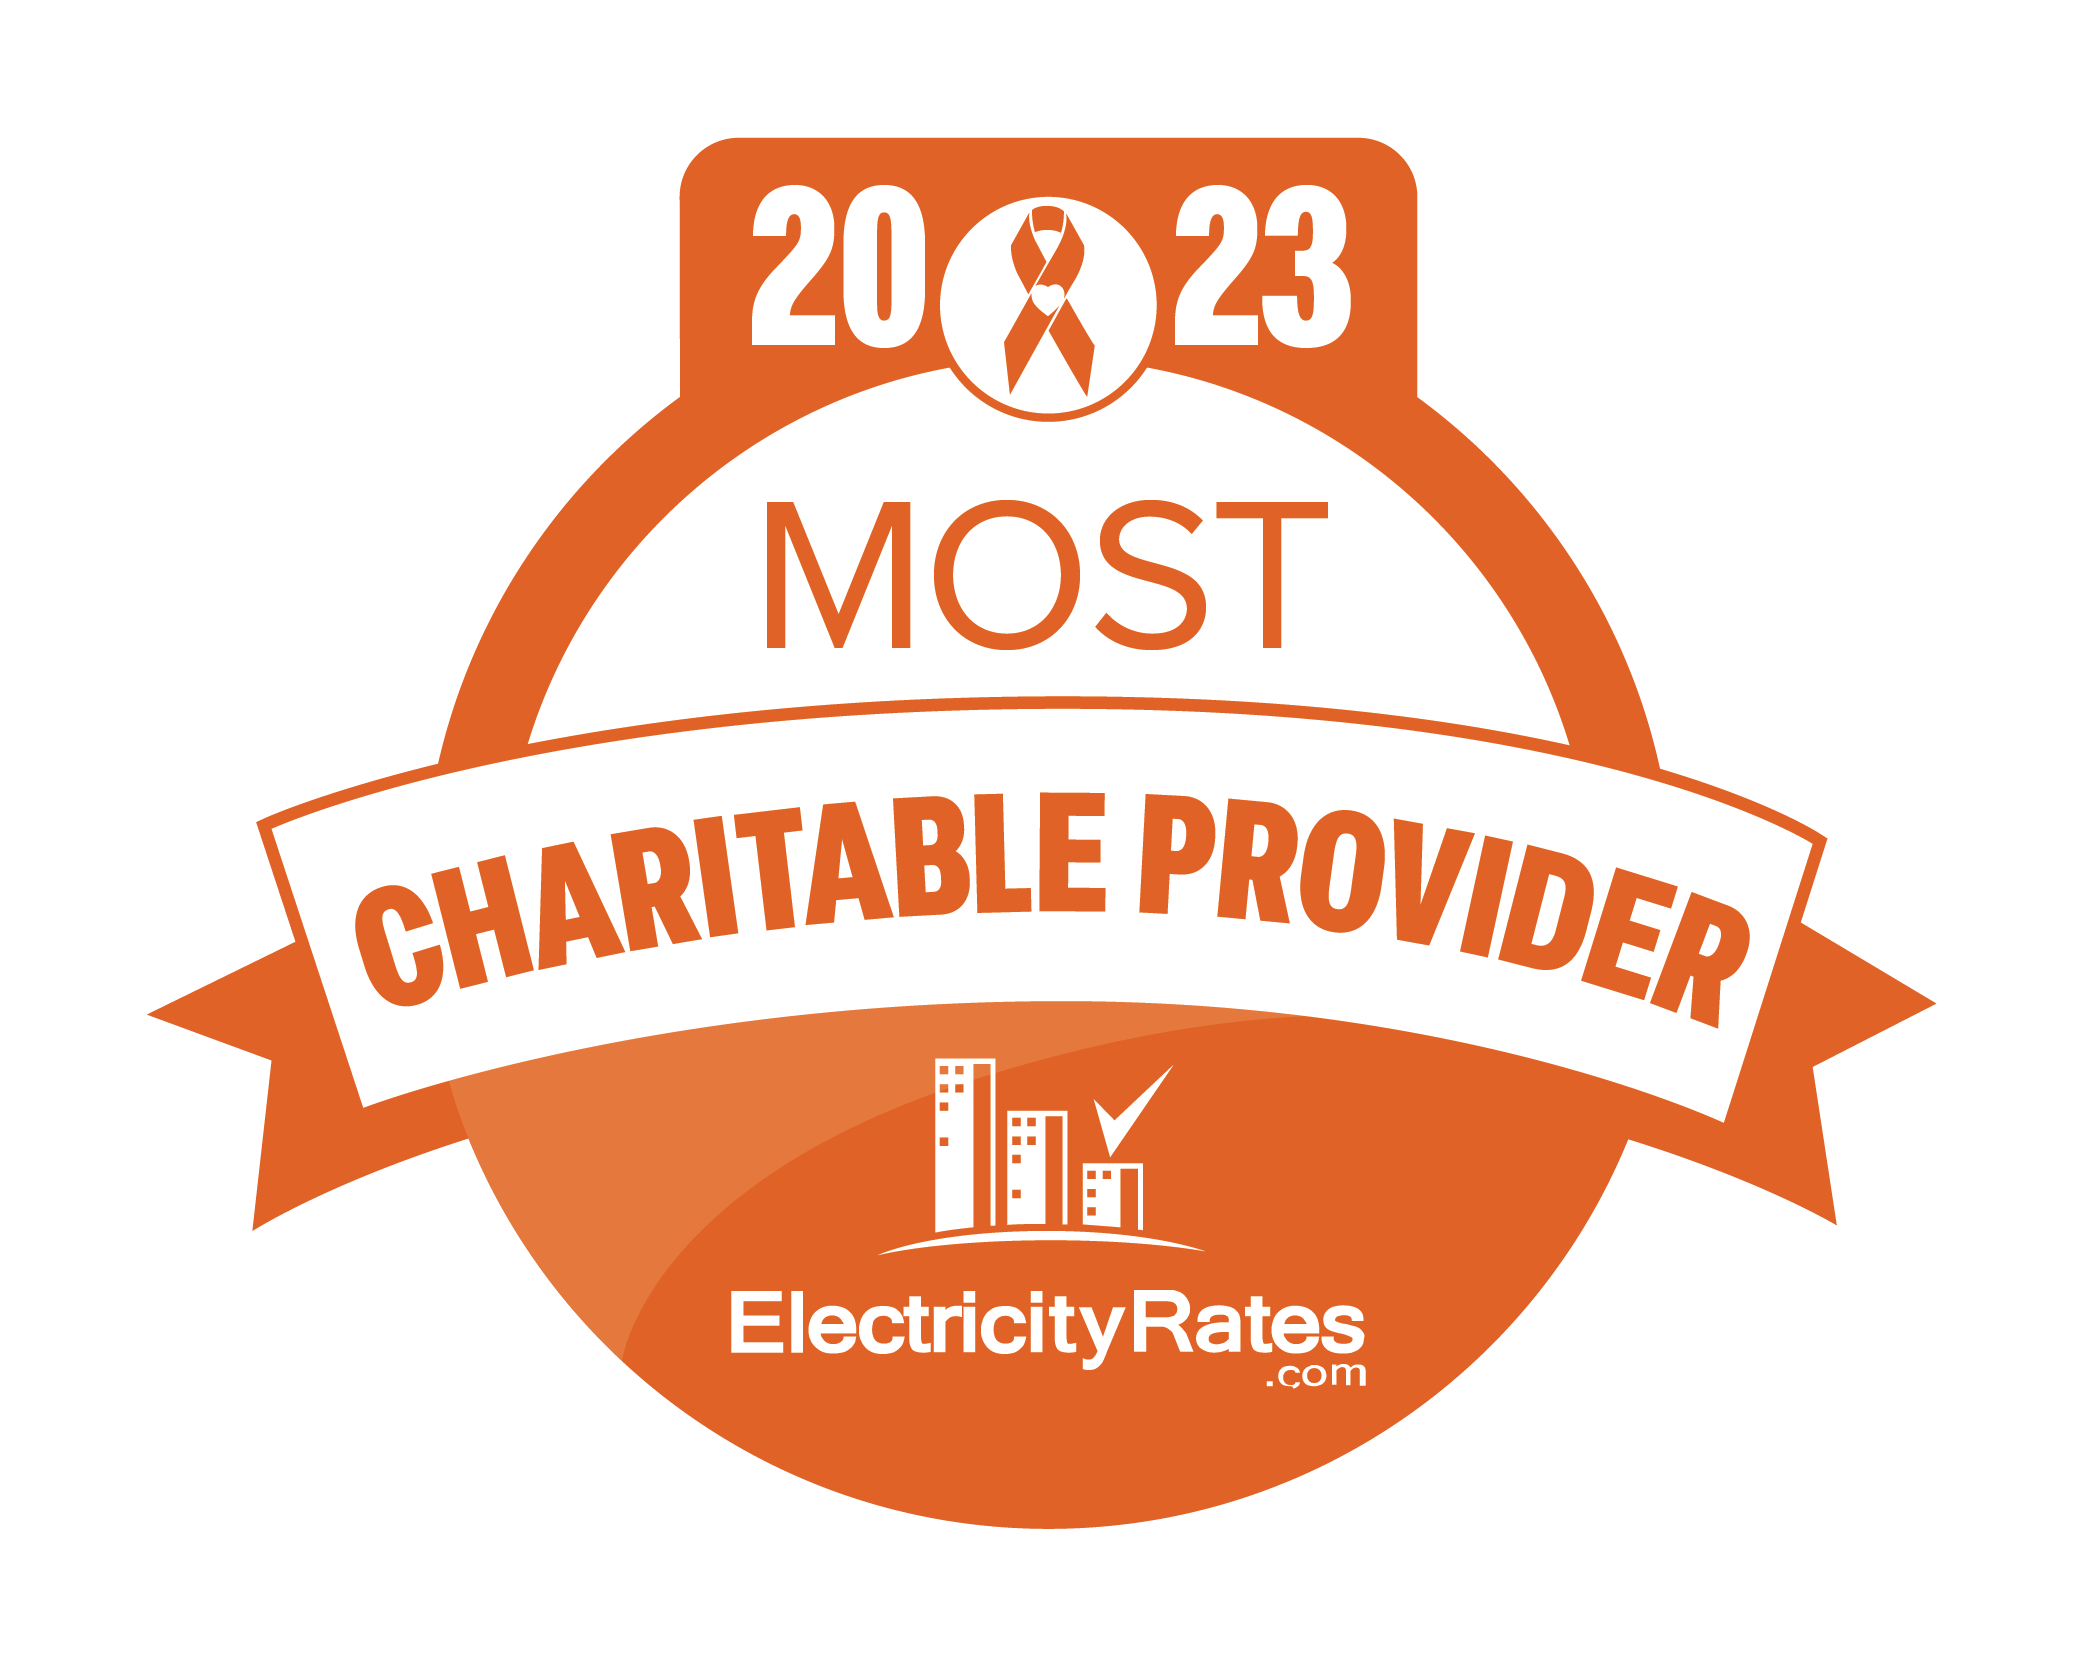 Best Electricity Provider badge